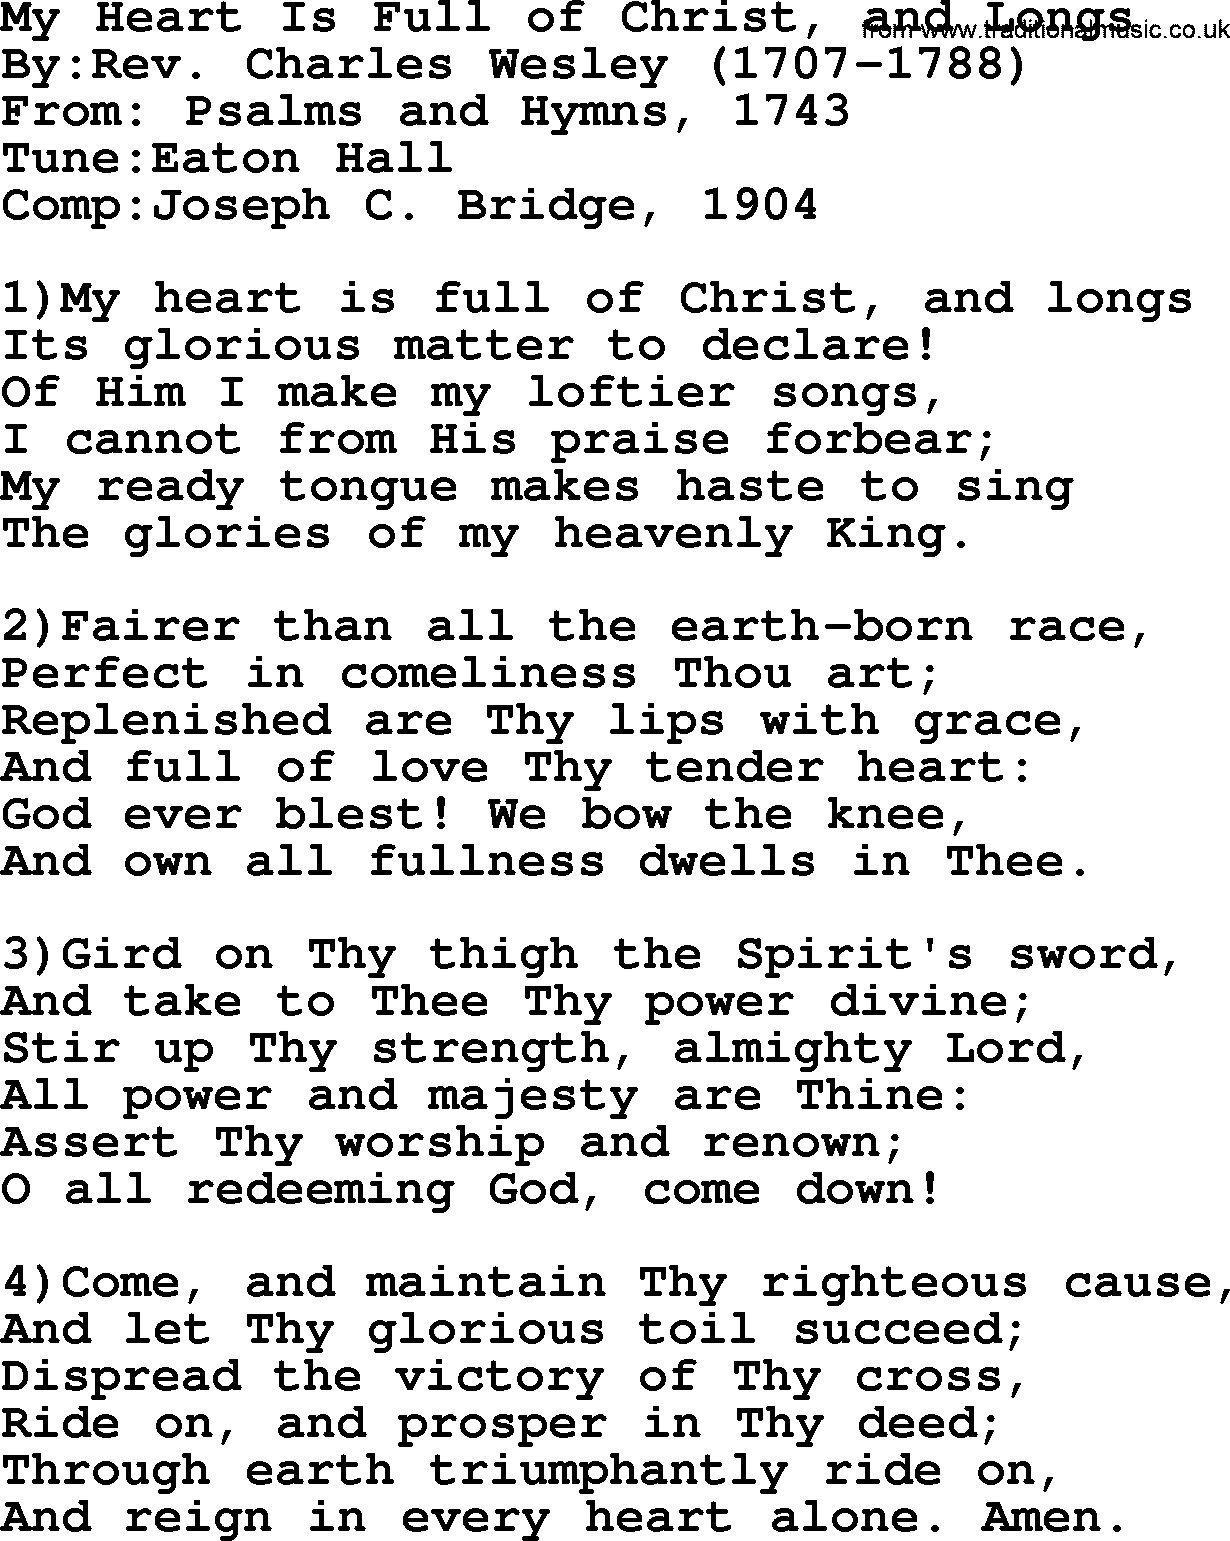 Methodist Hymn: My Heart Is Full Of Christ, And Longs, lyrics